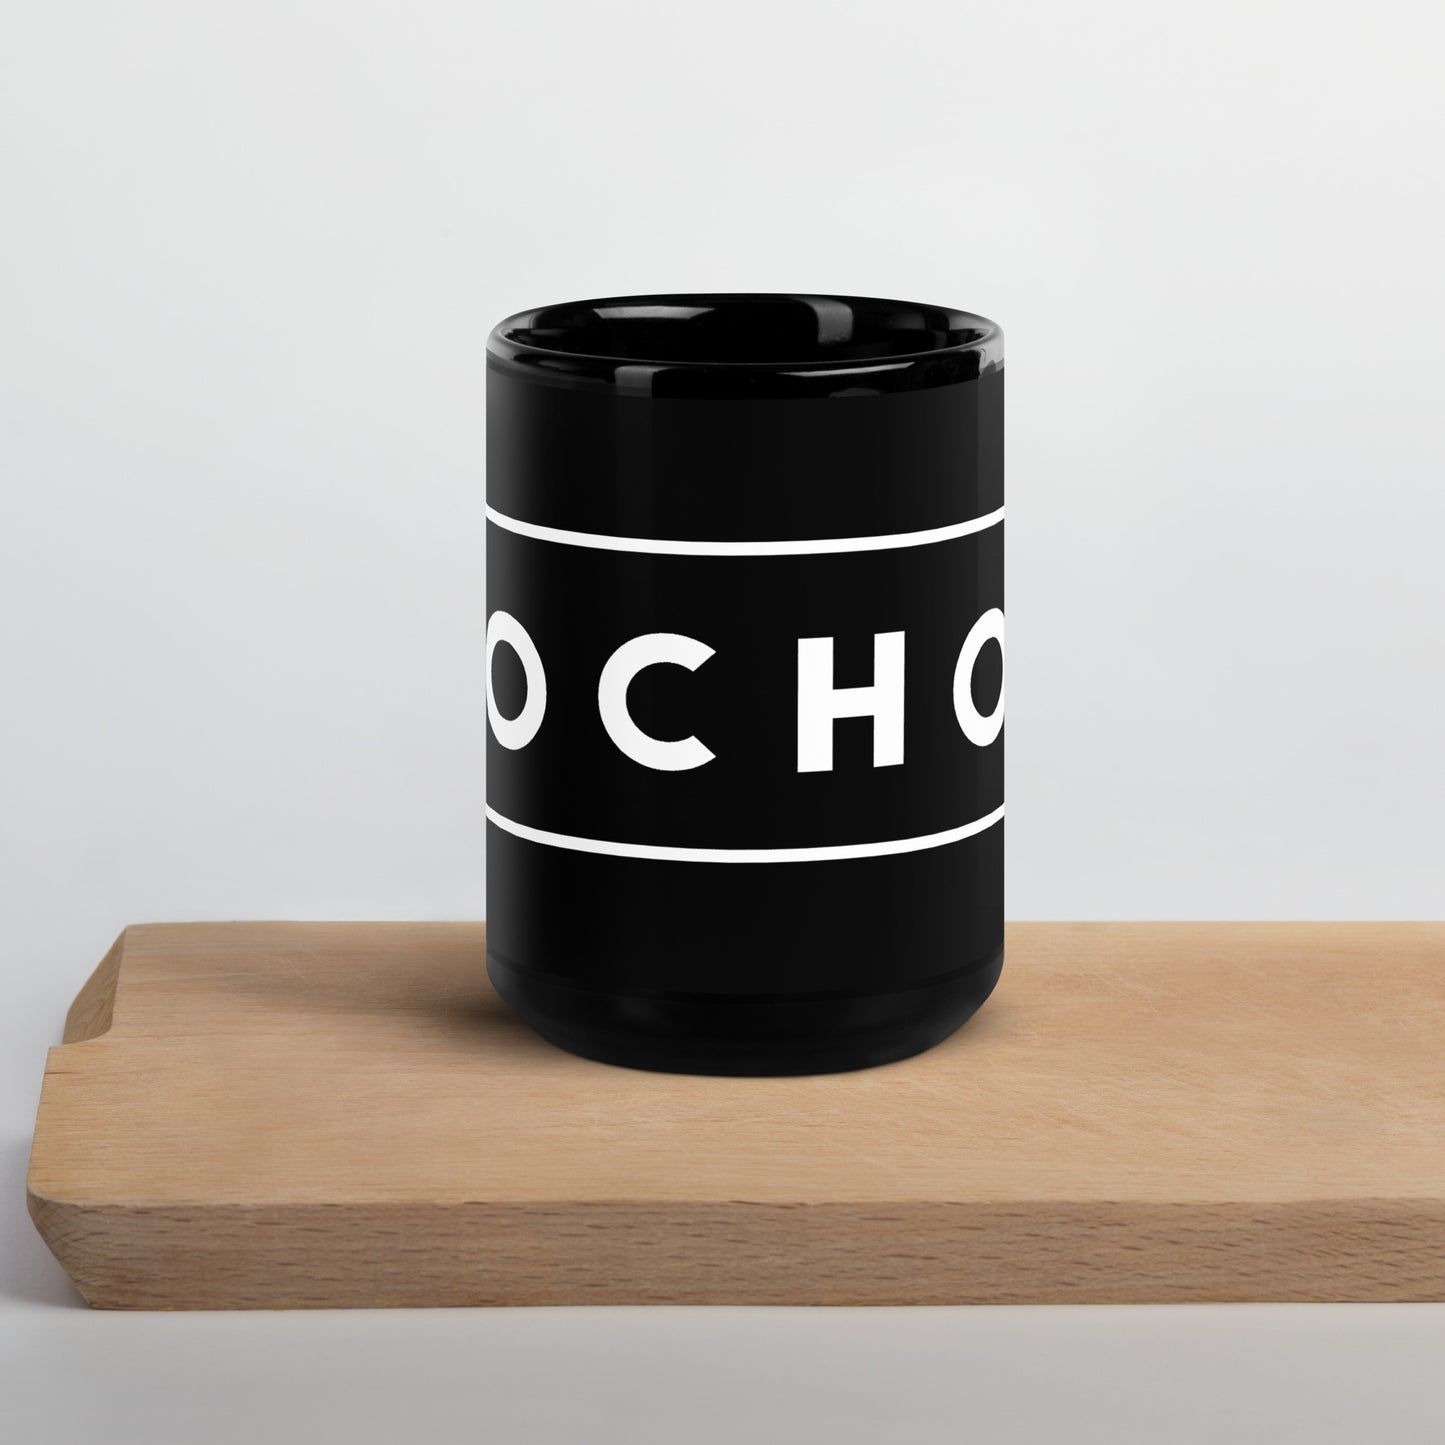 Ocho Black Glossy Mug